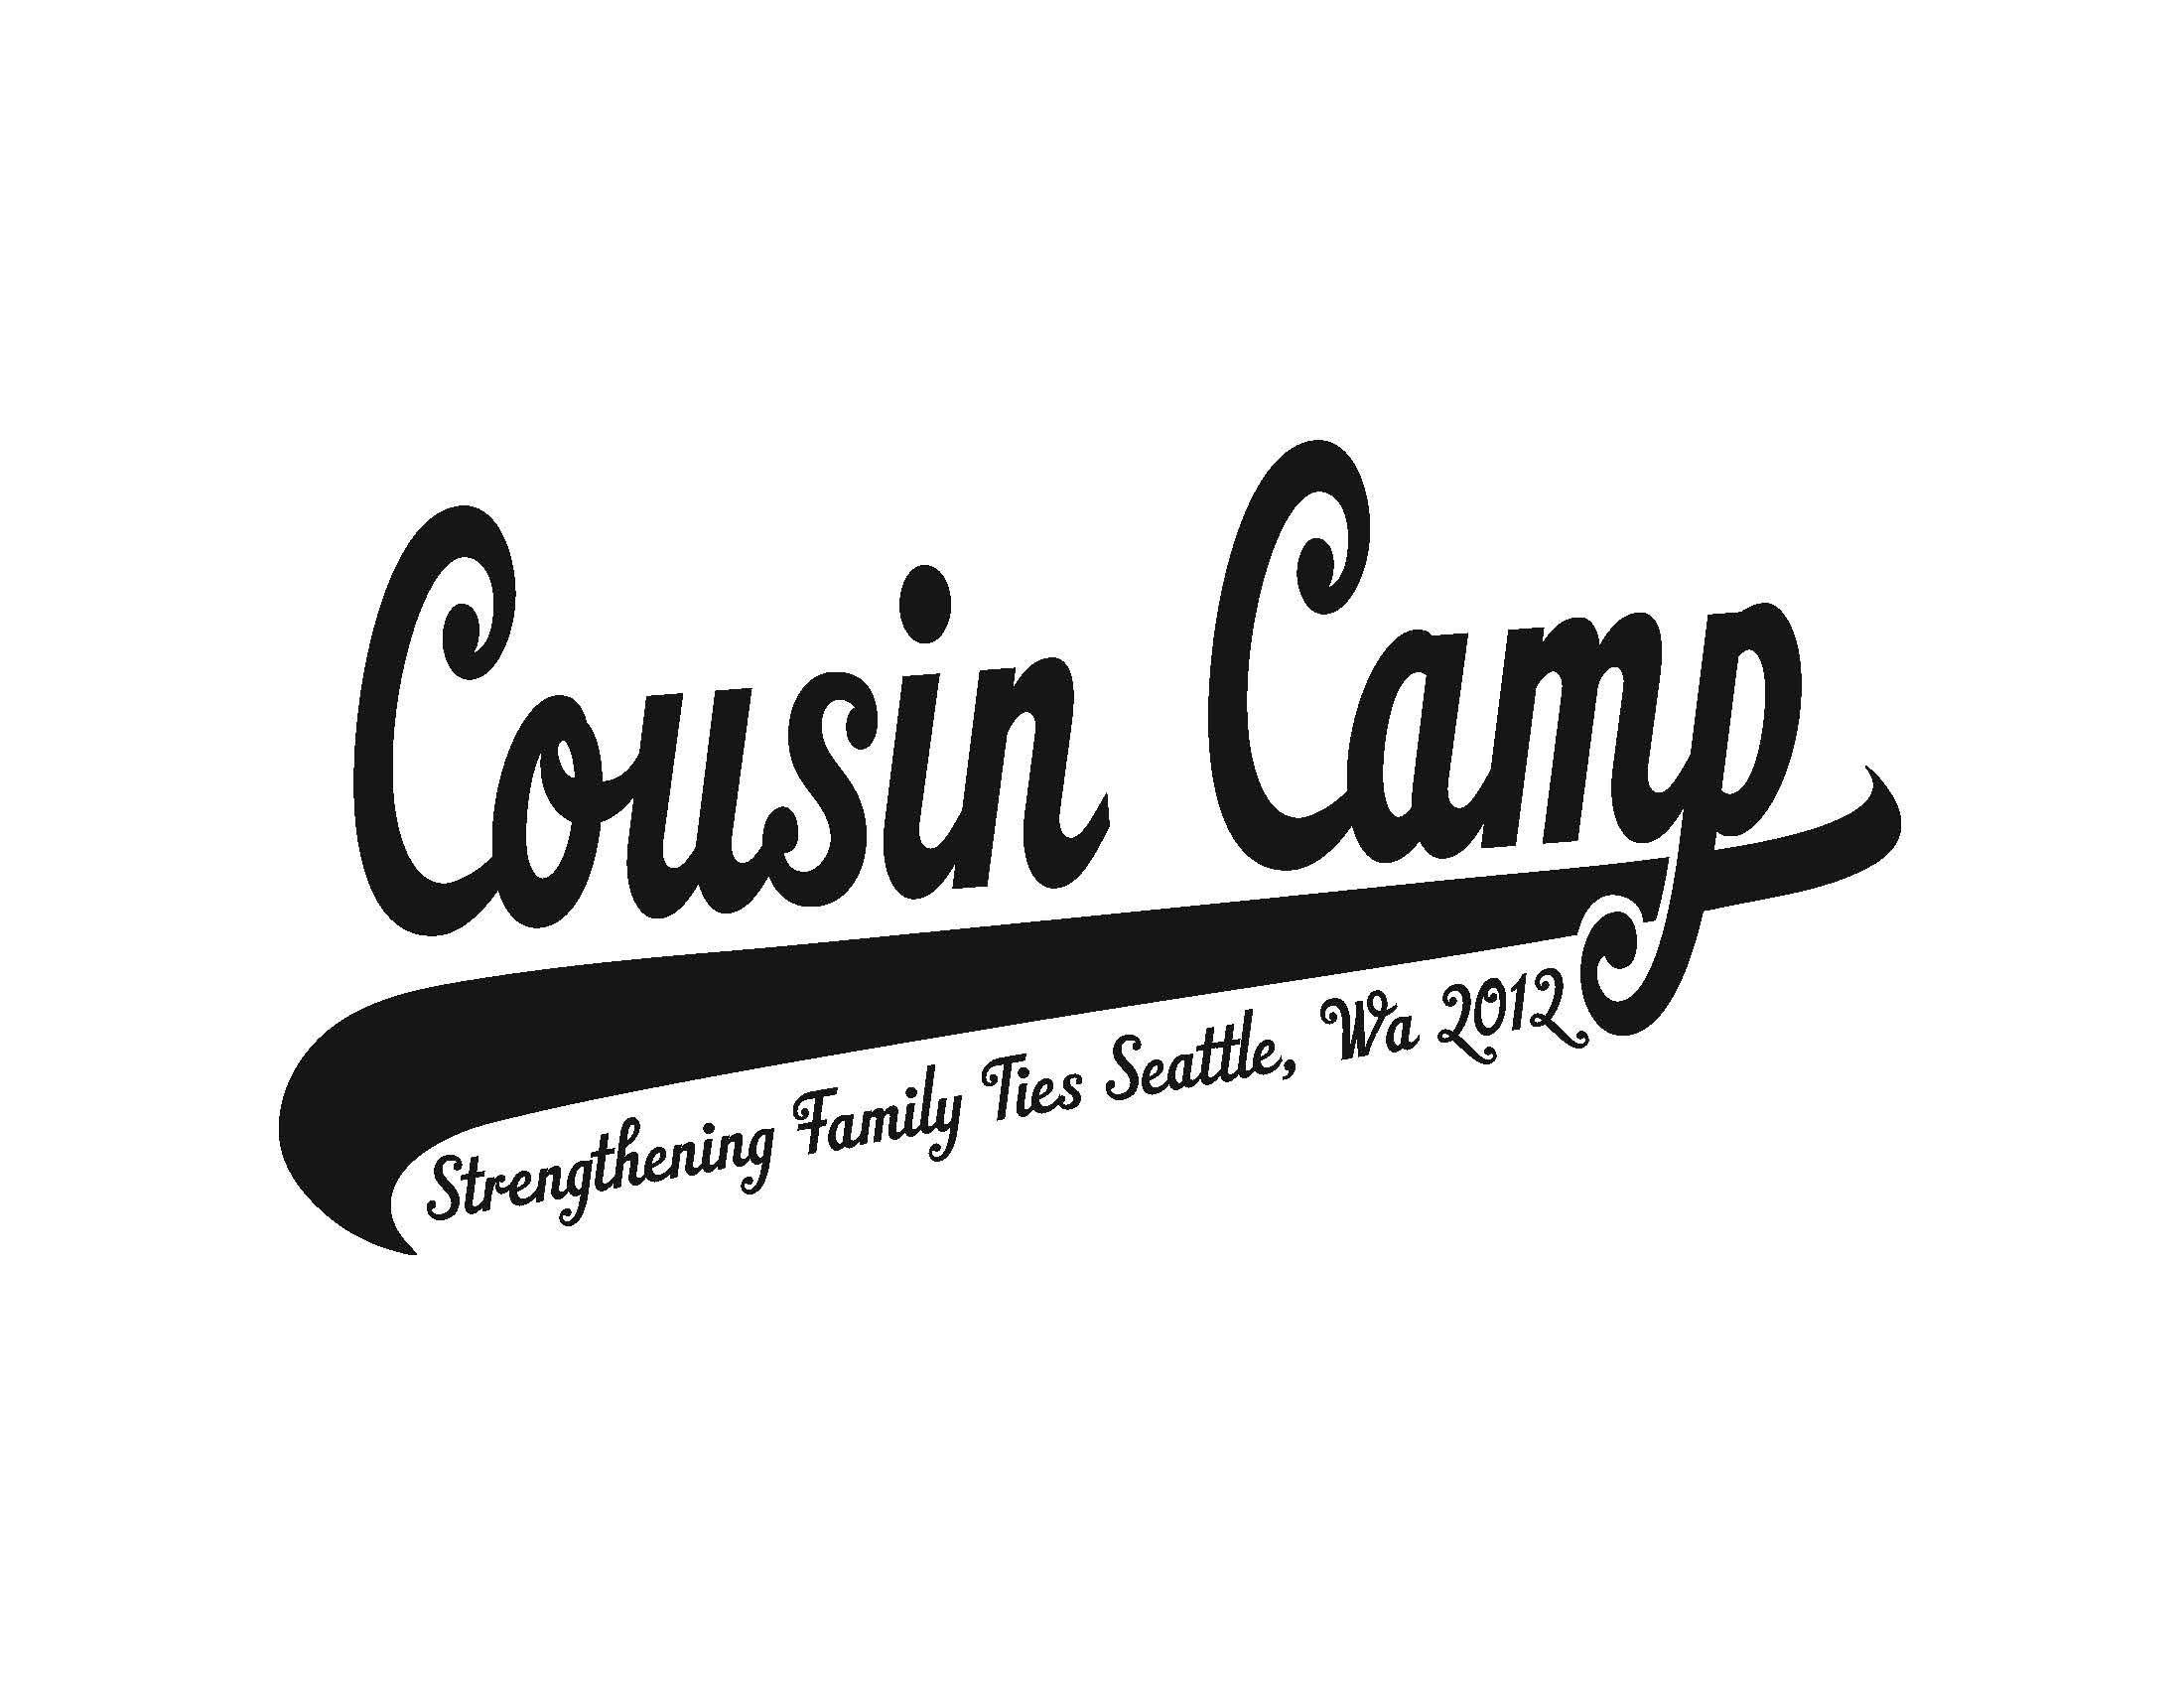 Fun Camp Logo - Cousin Camp Logo. Flyers Artwork Layouts. Camping